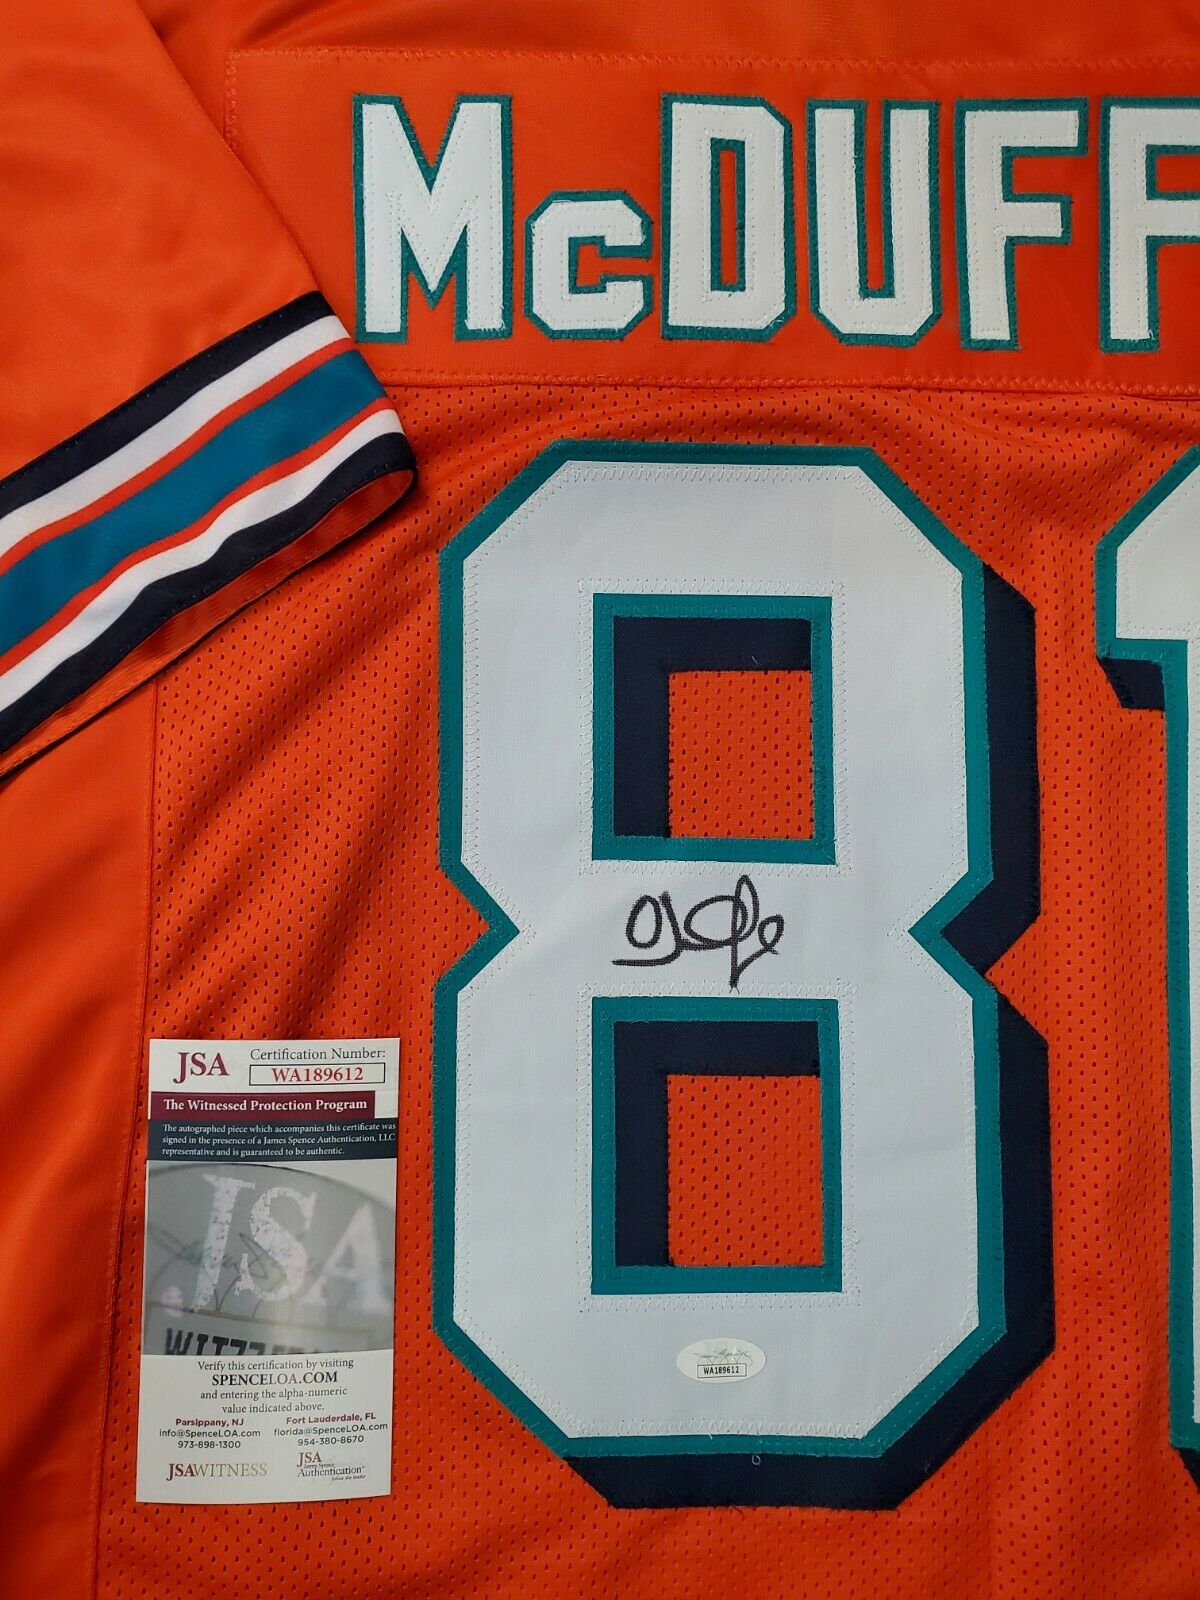 MVP Authentics Miami Dolphins Oj Mcduffie Autographed Signed Jersey Jsa  Coa 107.10 sports jersey framing , jersey framing